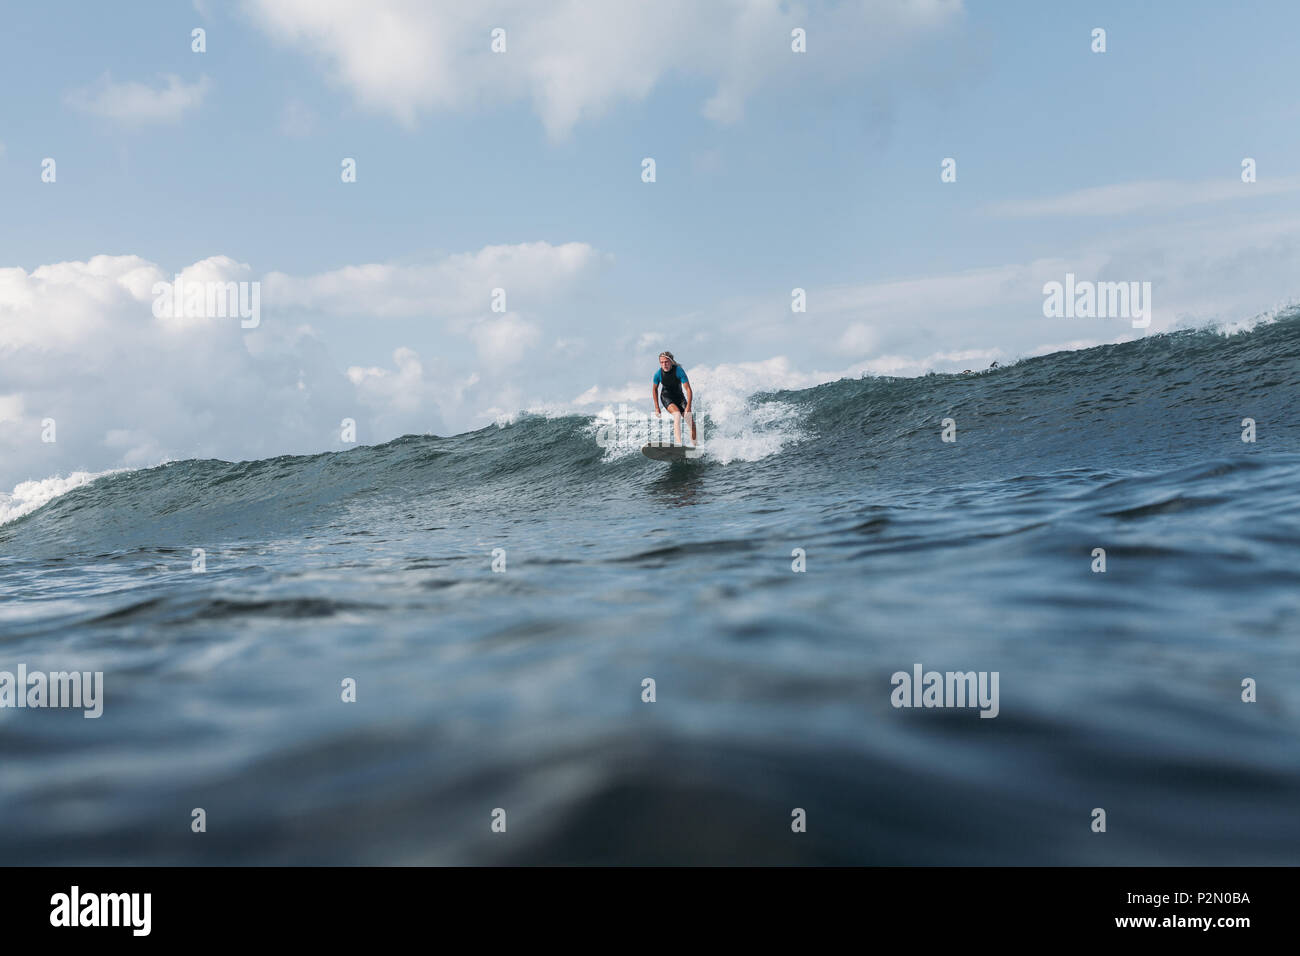 Sportler surfen Welle im Ozean Stockfoto